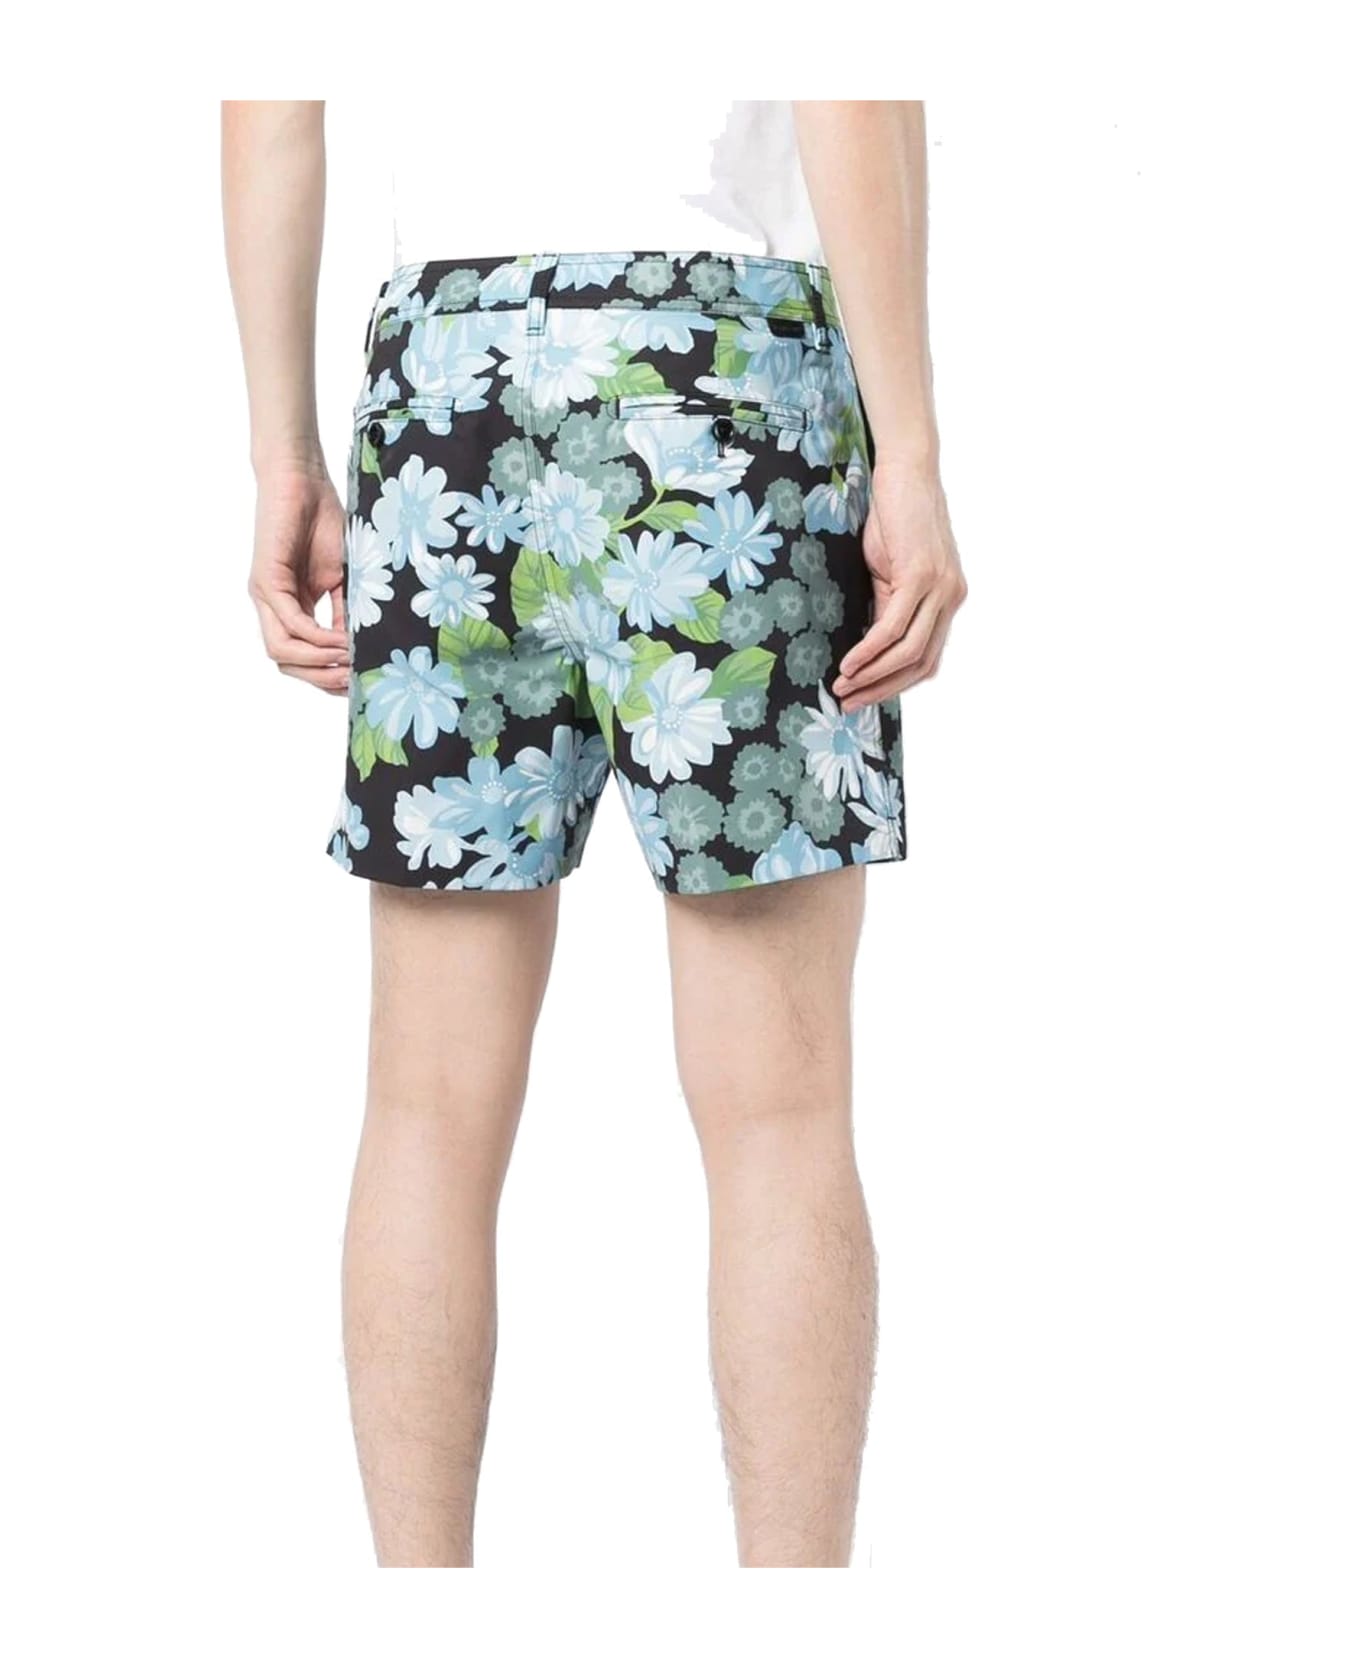 Tom Ford Flower Print Shorts - Blue